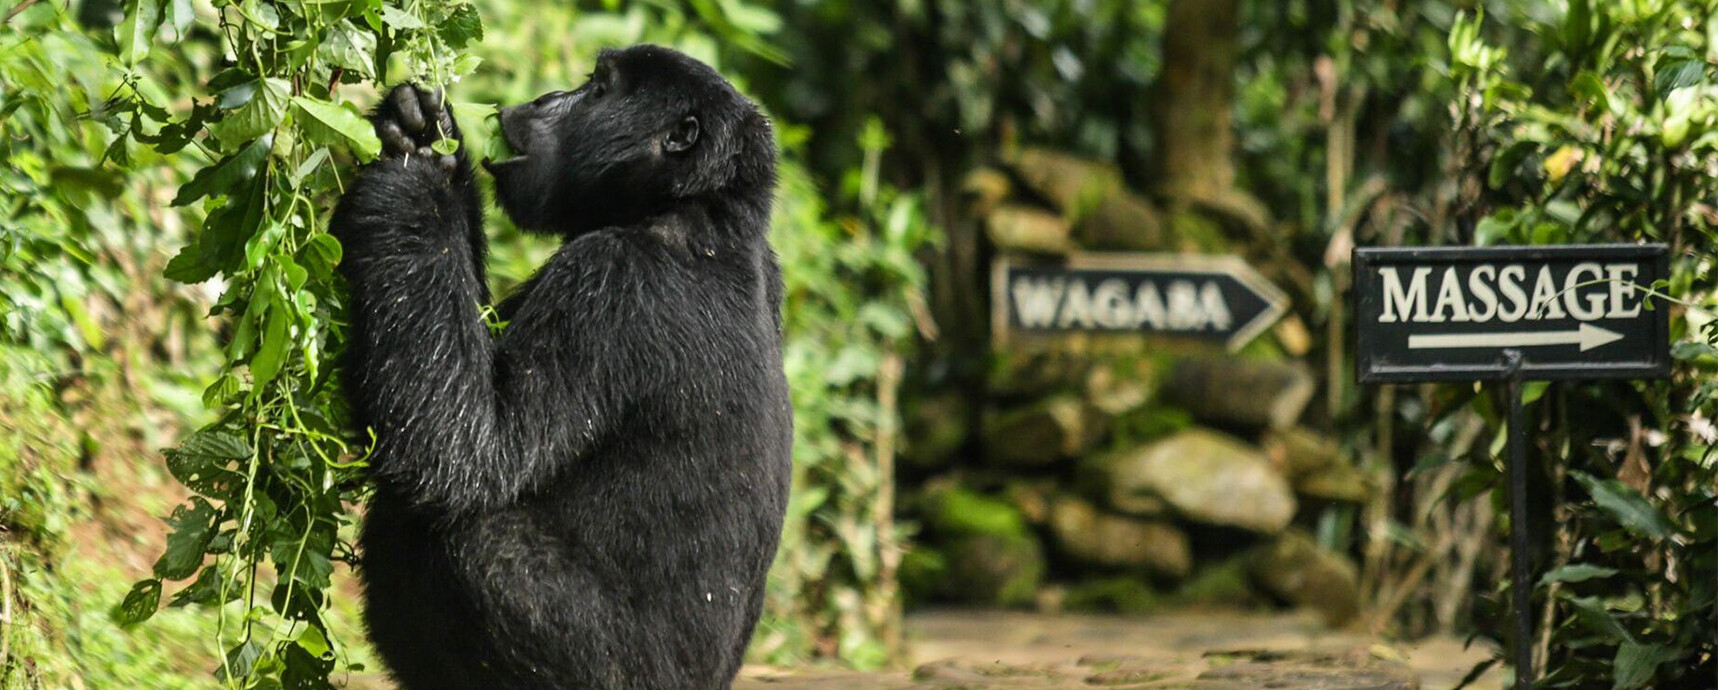 Галерея_0000_Bwindi_gorilla-at-lodge_preview.jpg